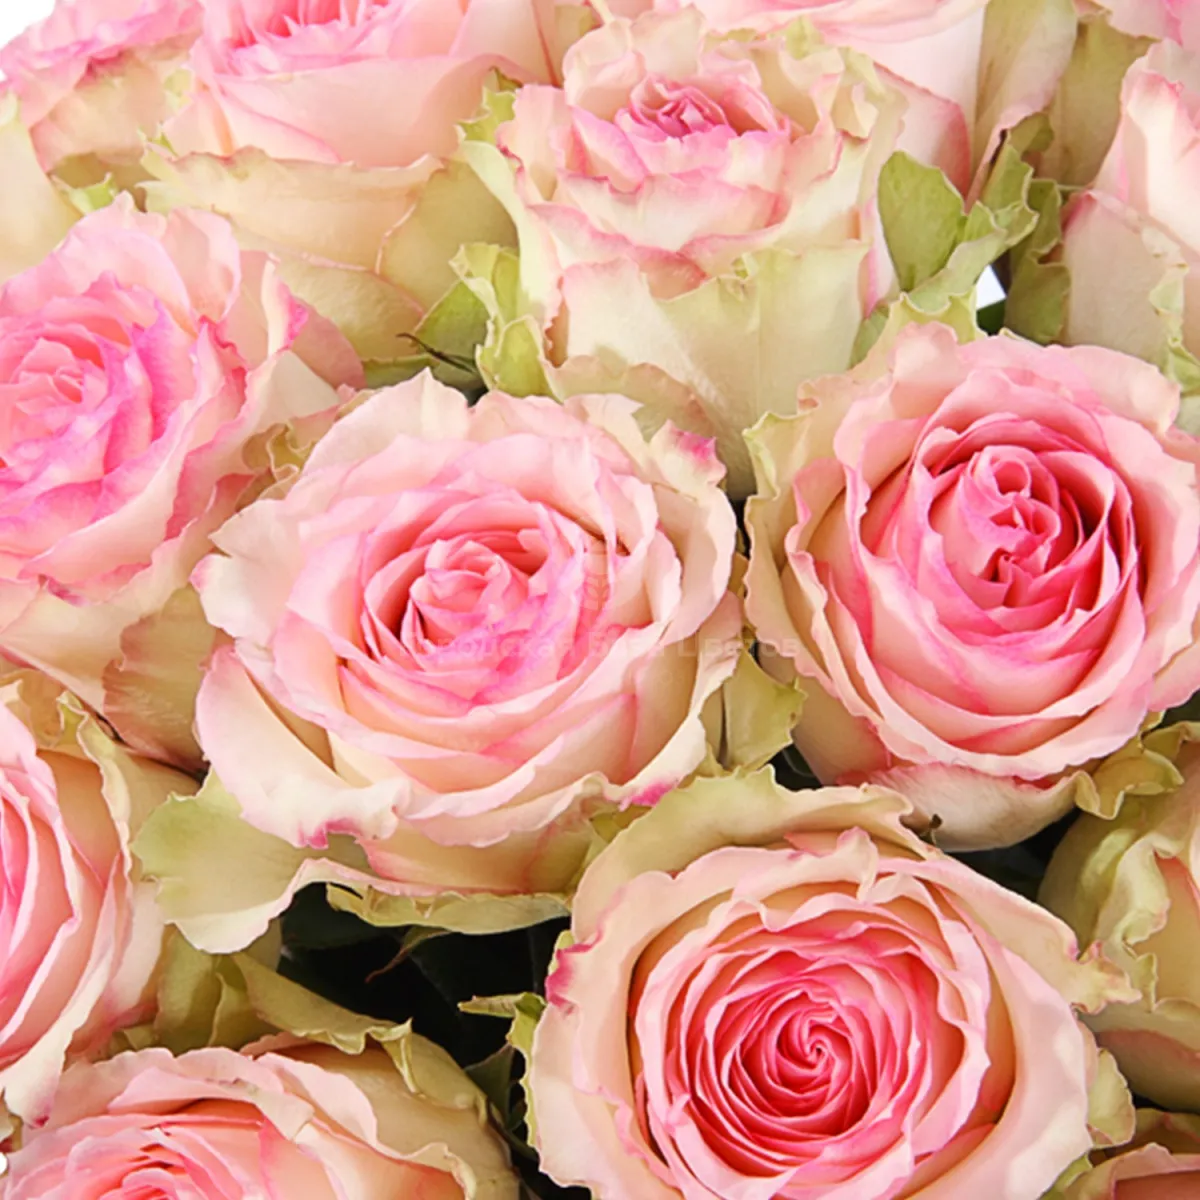 35 бело-розовых роз (70 см)